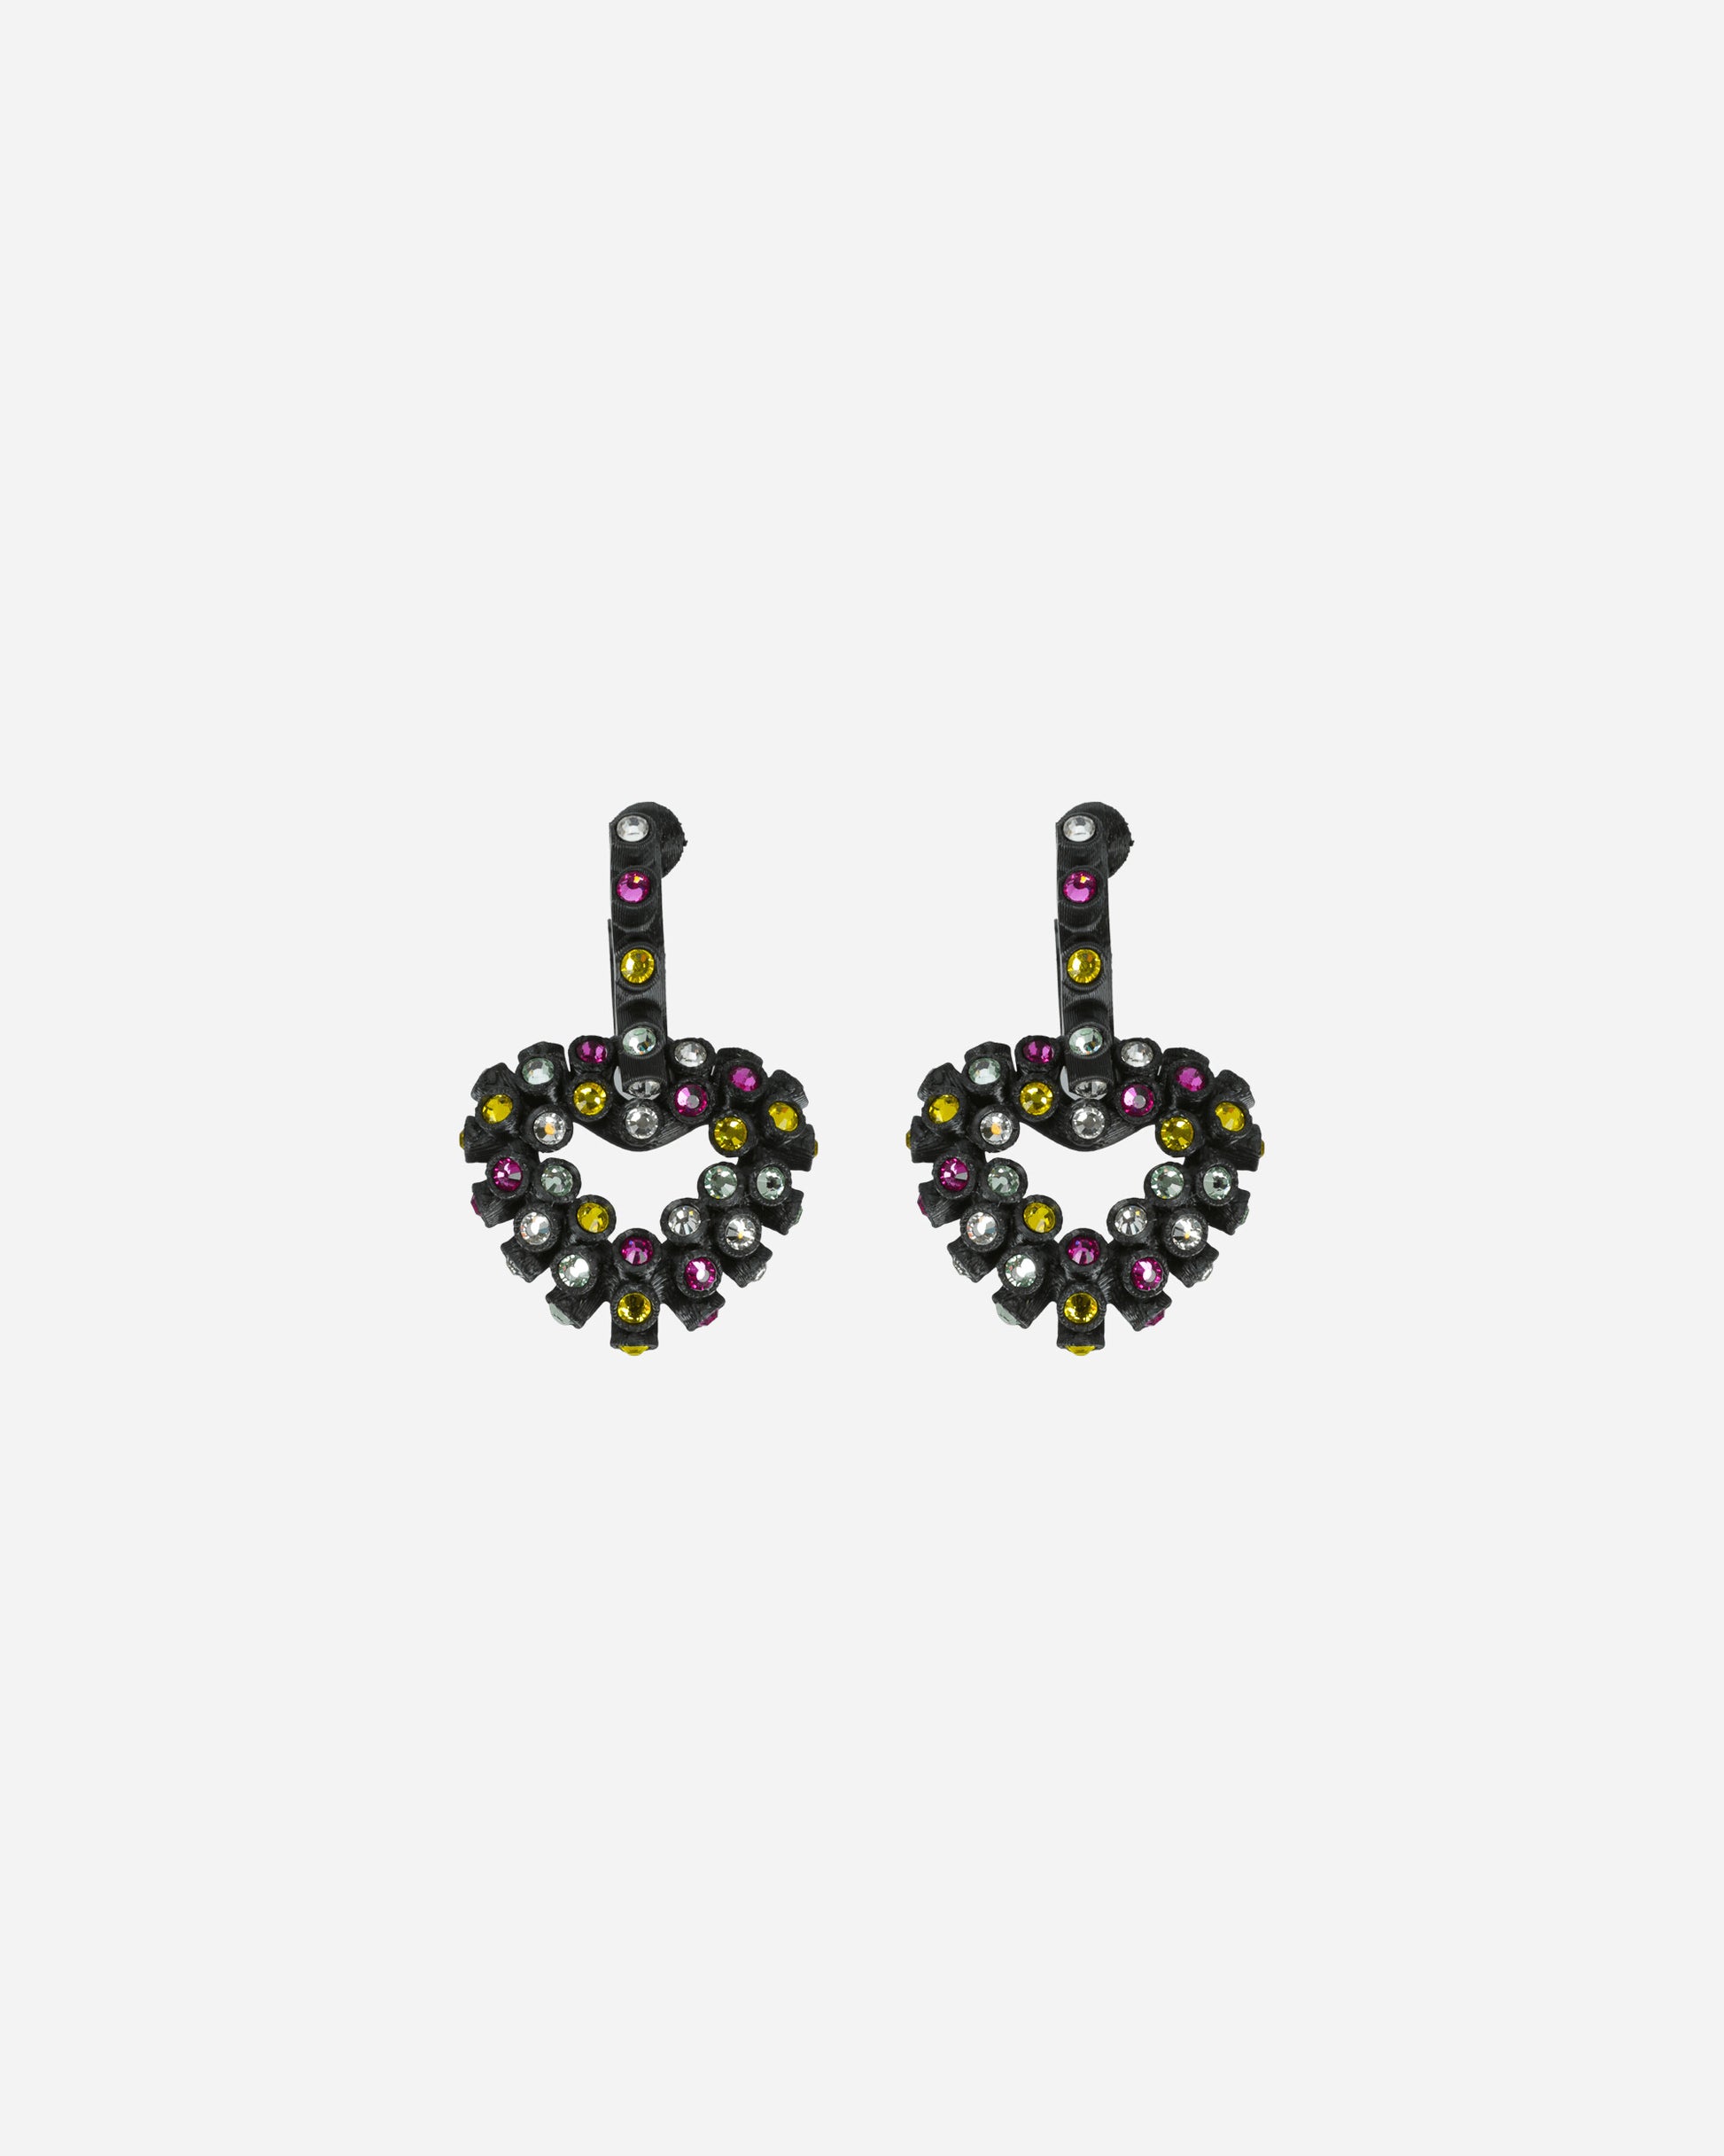 Roussey Wmns Tiny Crush Earrings Exclusive Multi Black Exclu Jewellery Earrings F23E09 1